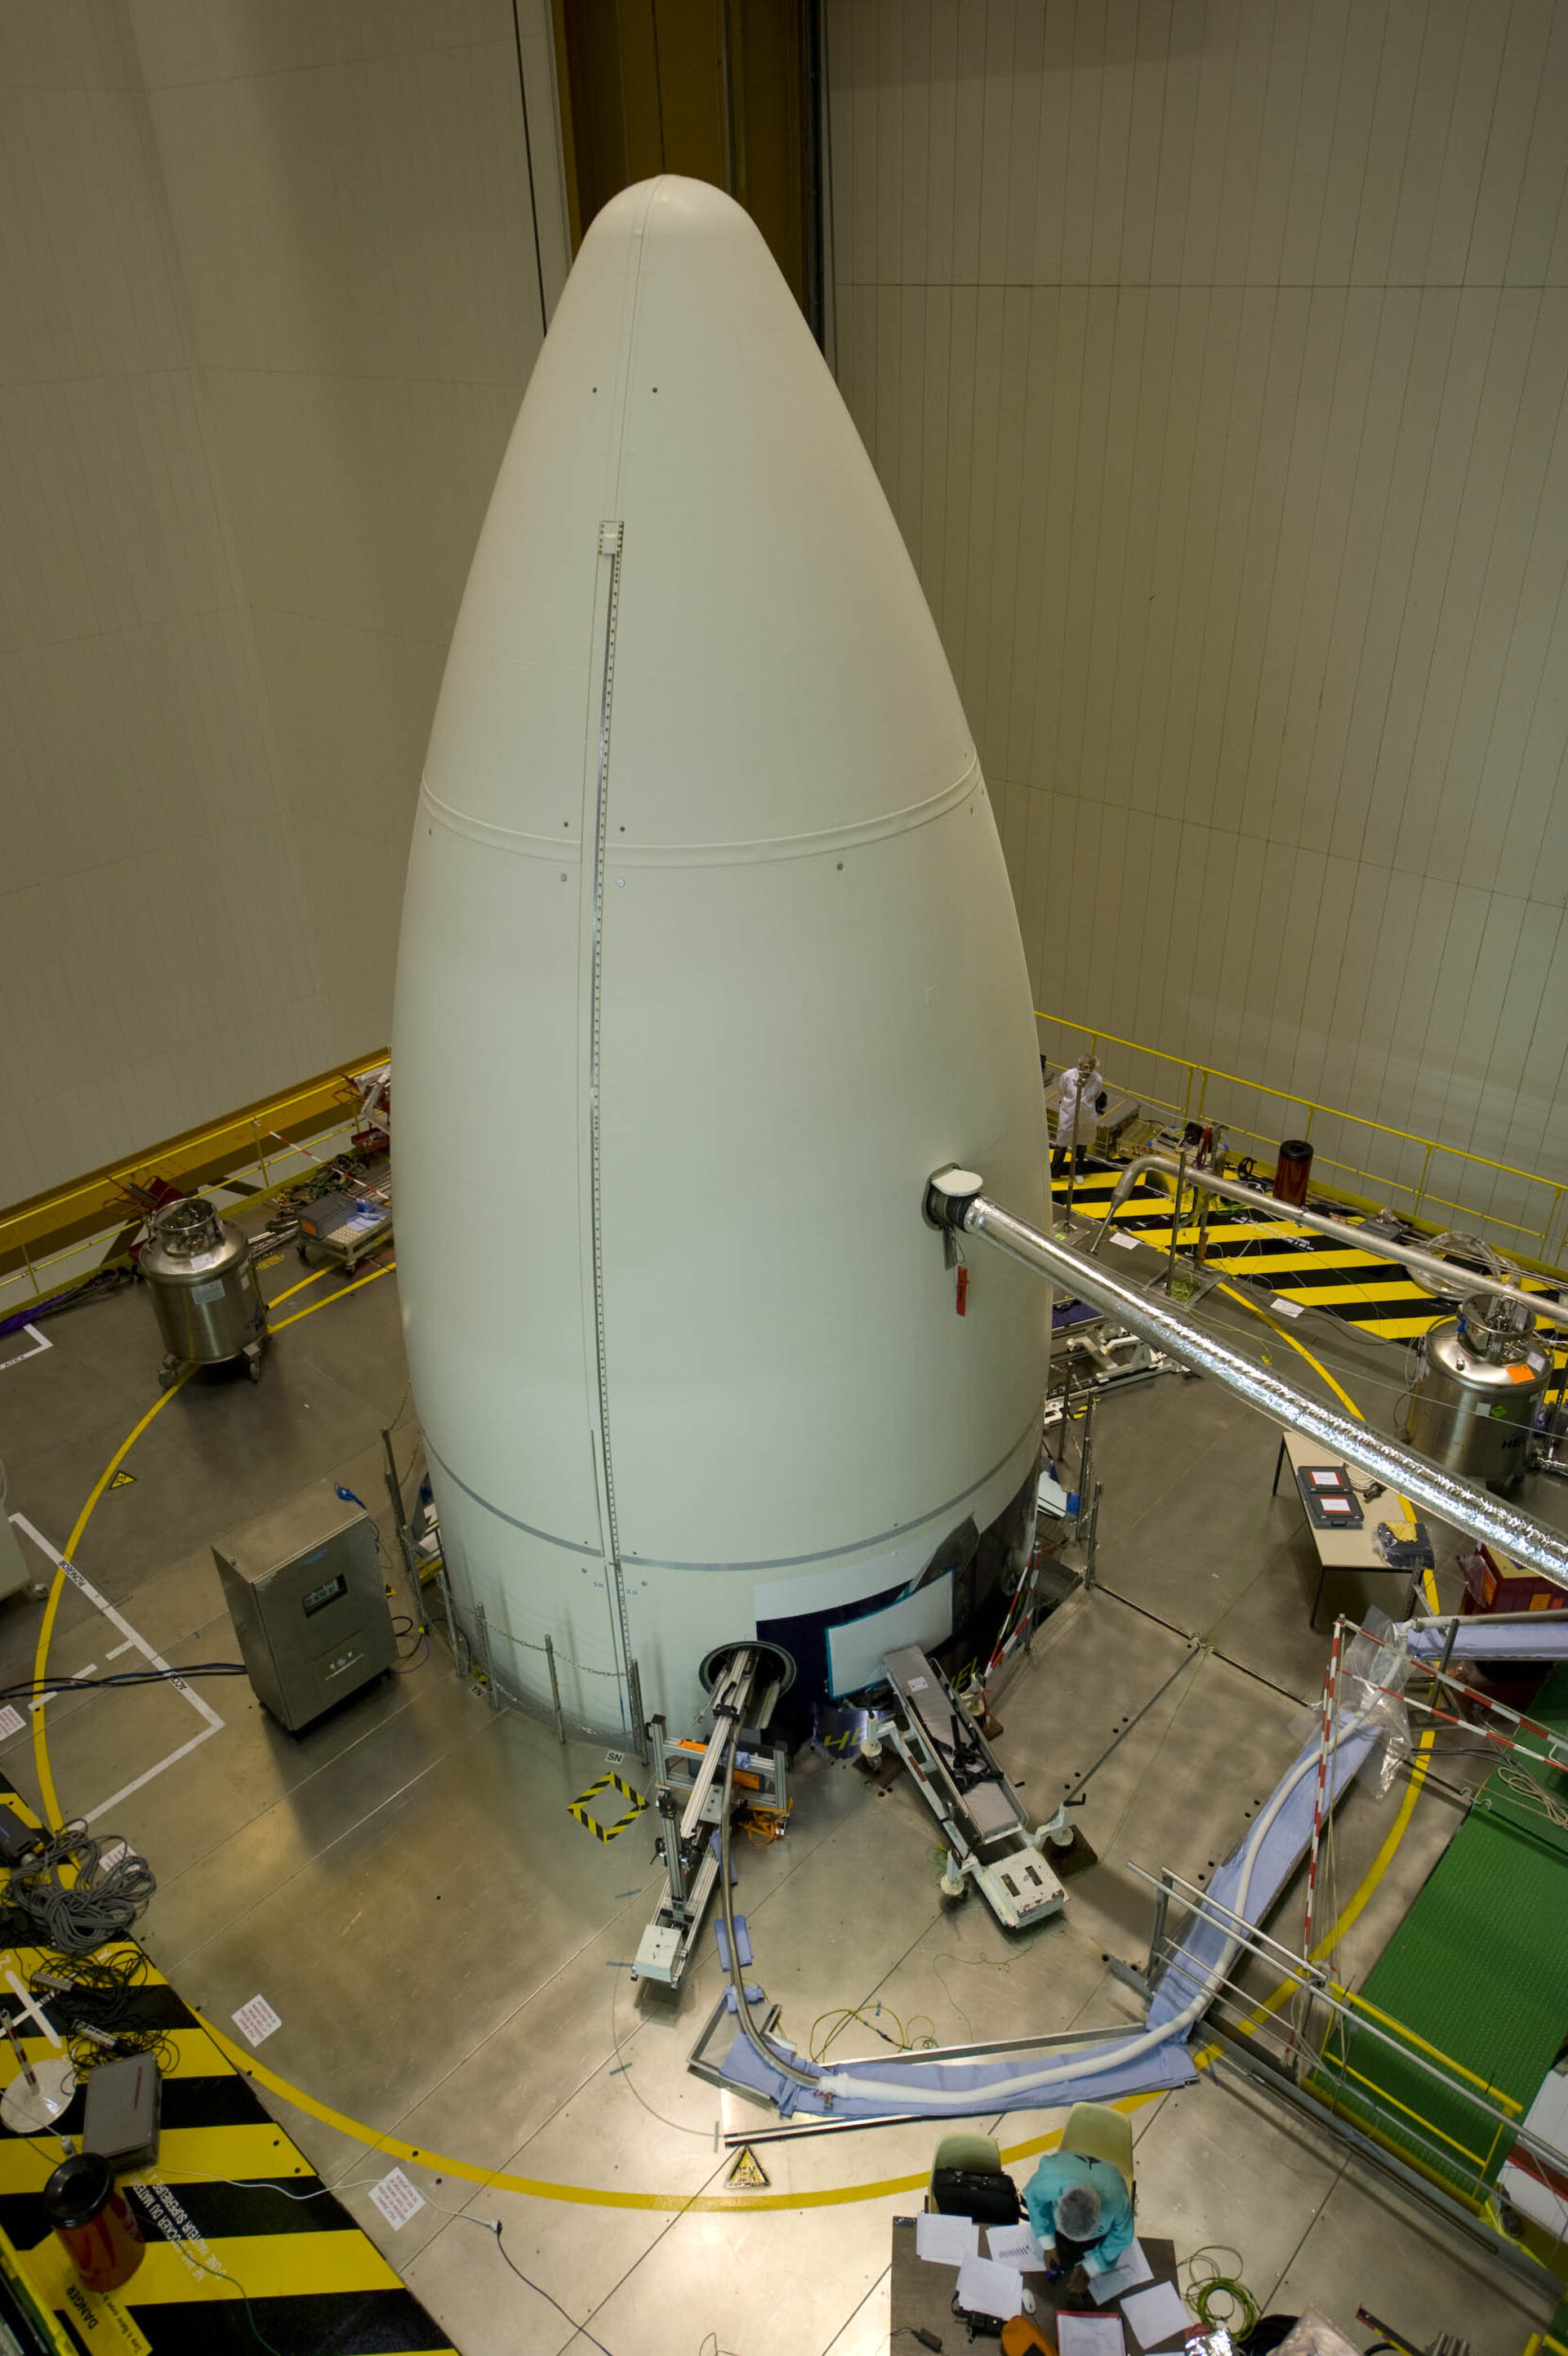 Ariane 5 fairing carrying Herschel and Planck